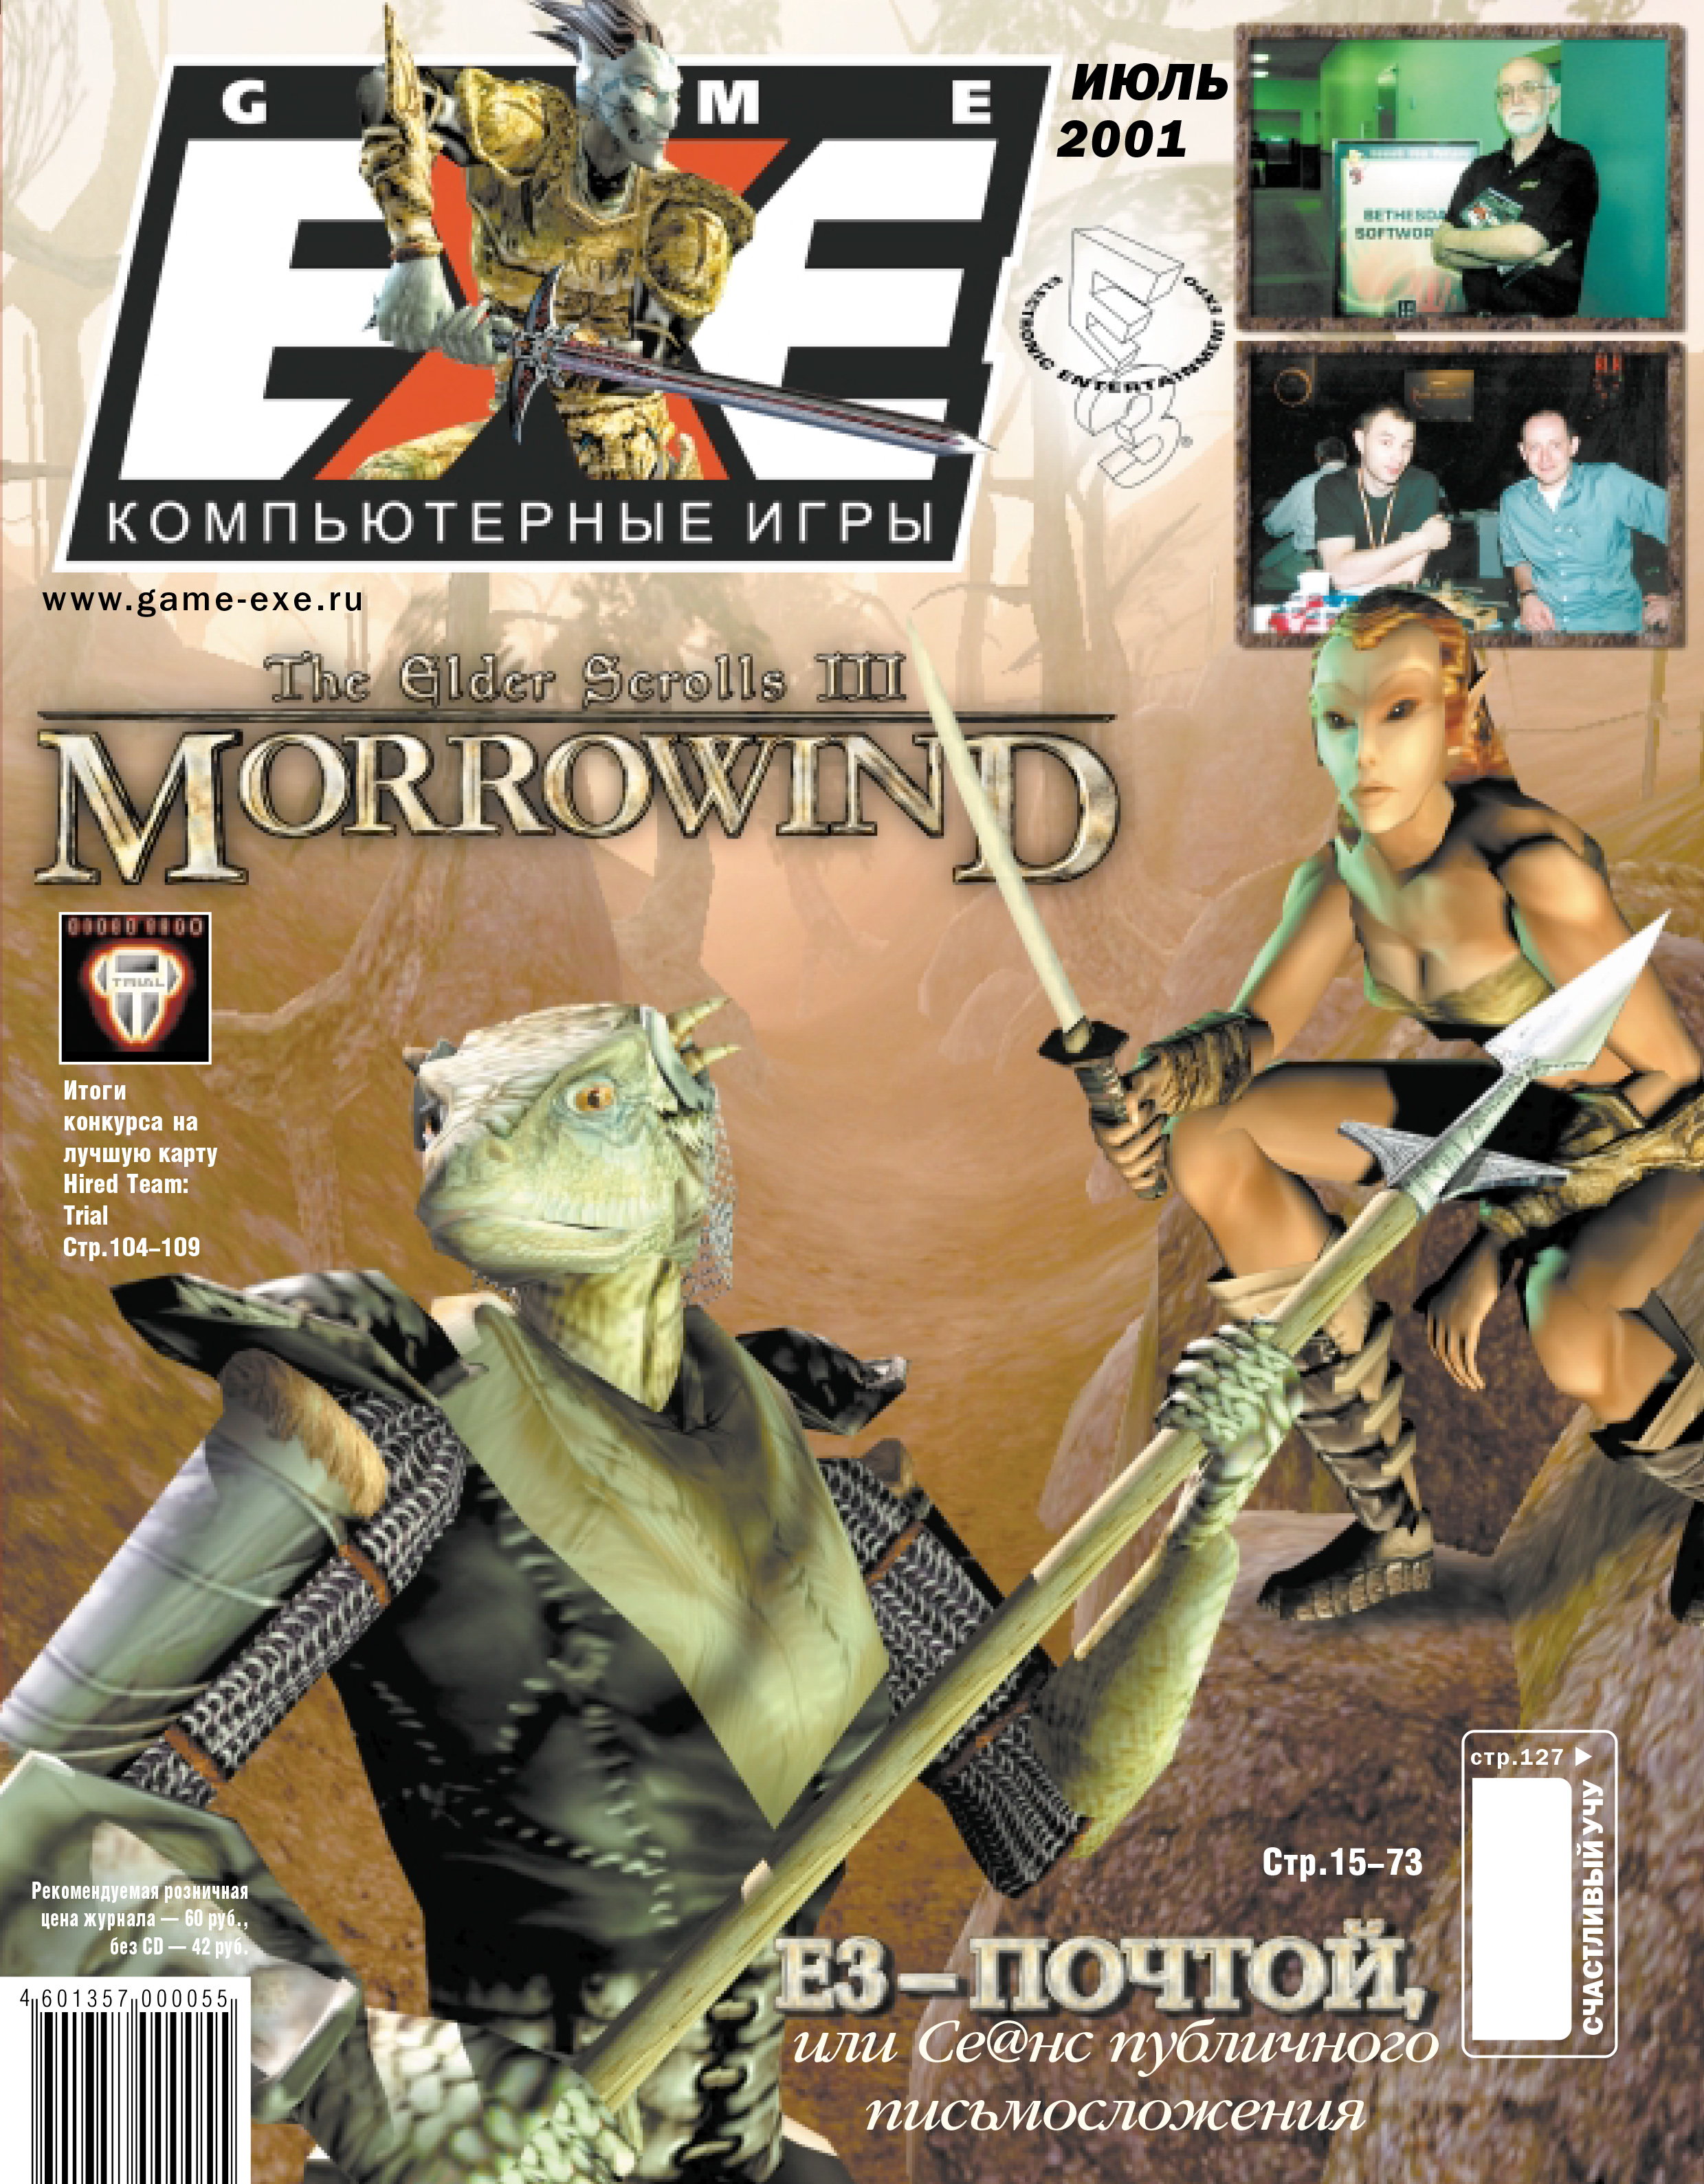 Download game exe. Game exe 2001. Game exe журнал. Лучшие компьютерные игры журнал. Game.exe обложки.